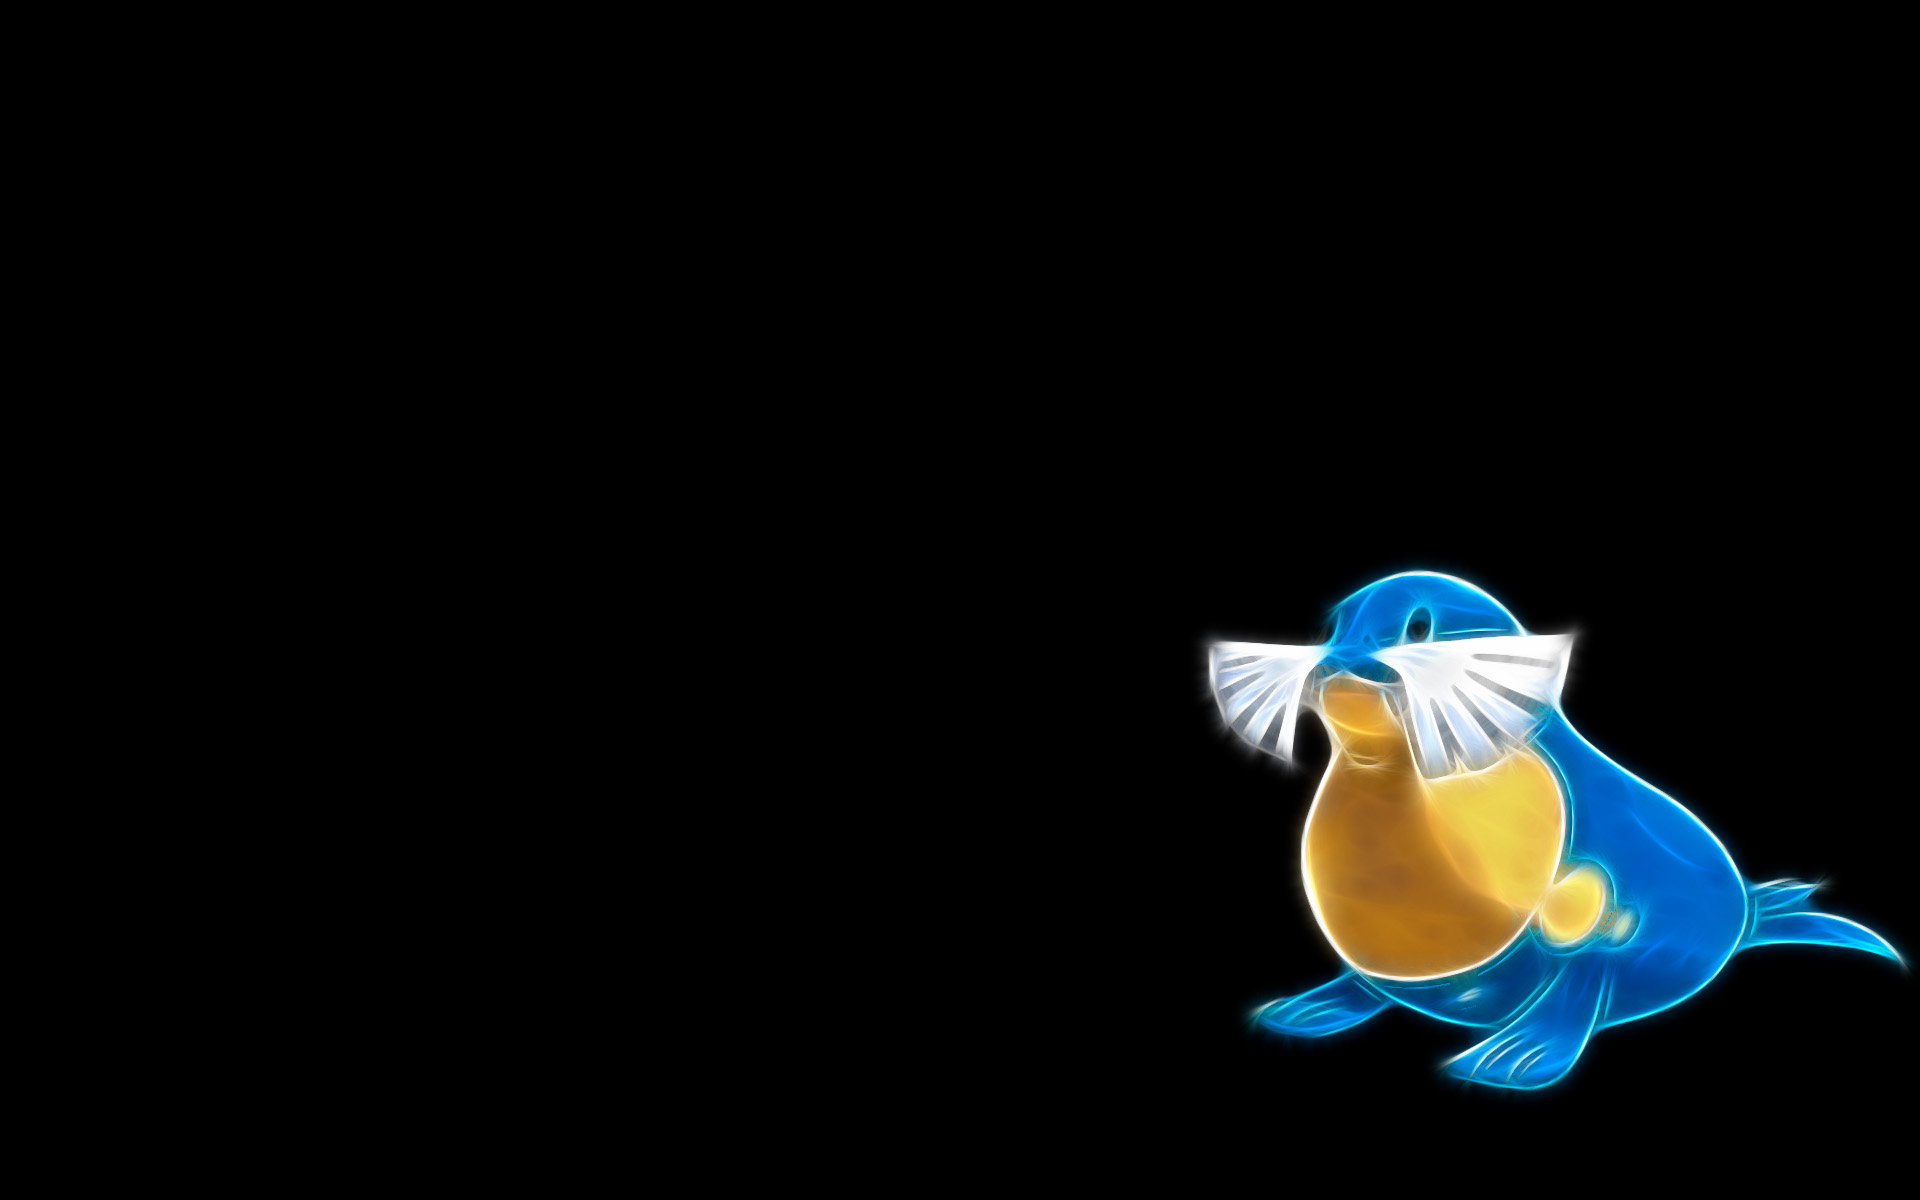 Sealeo, the ice Pokémon from the Pokémon anime, in a captivating desktop wallpaper.